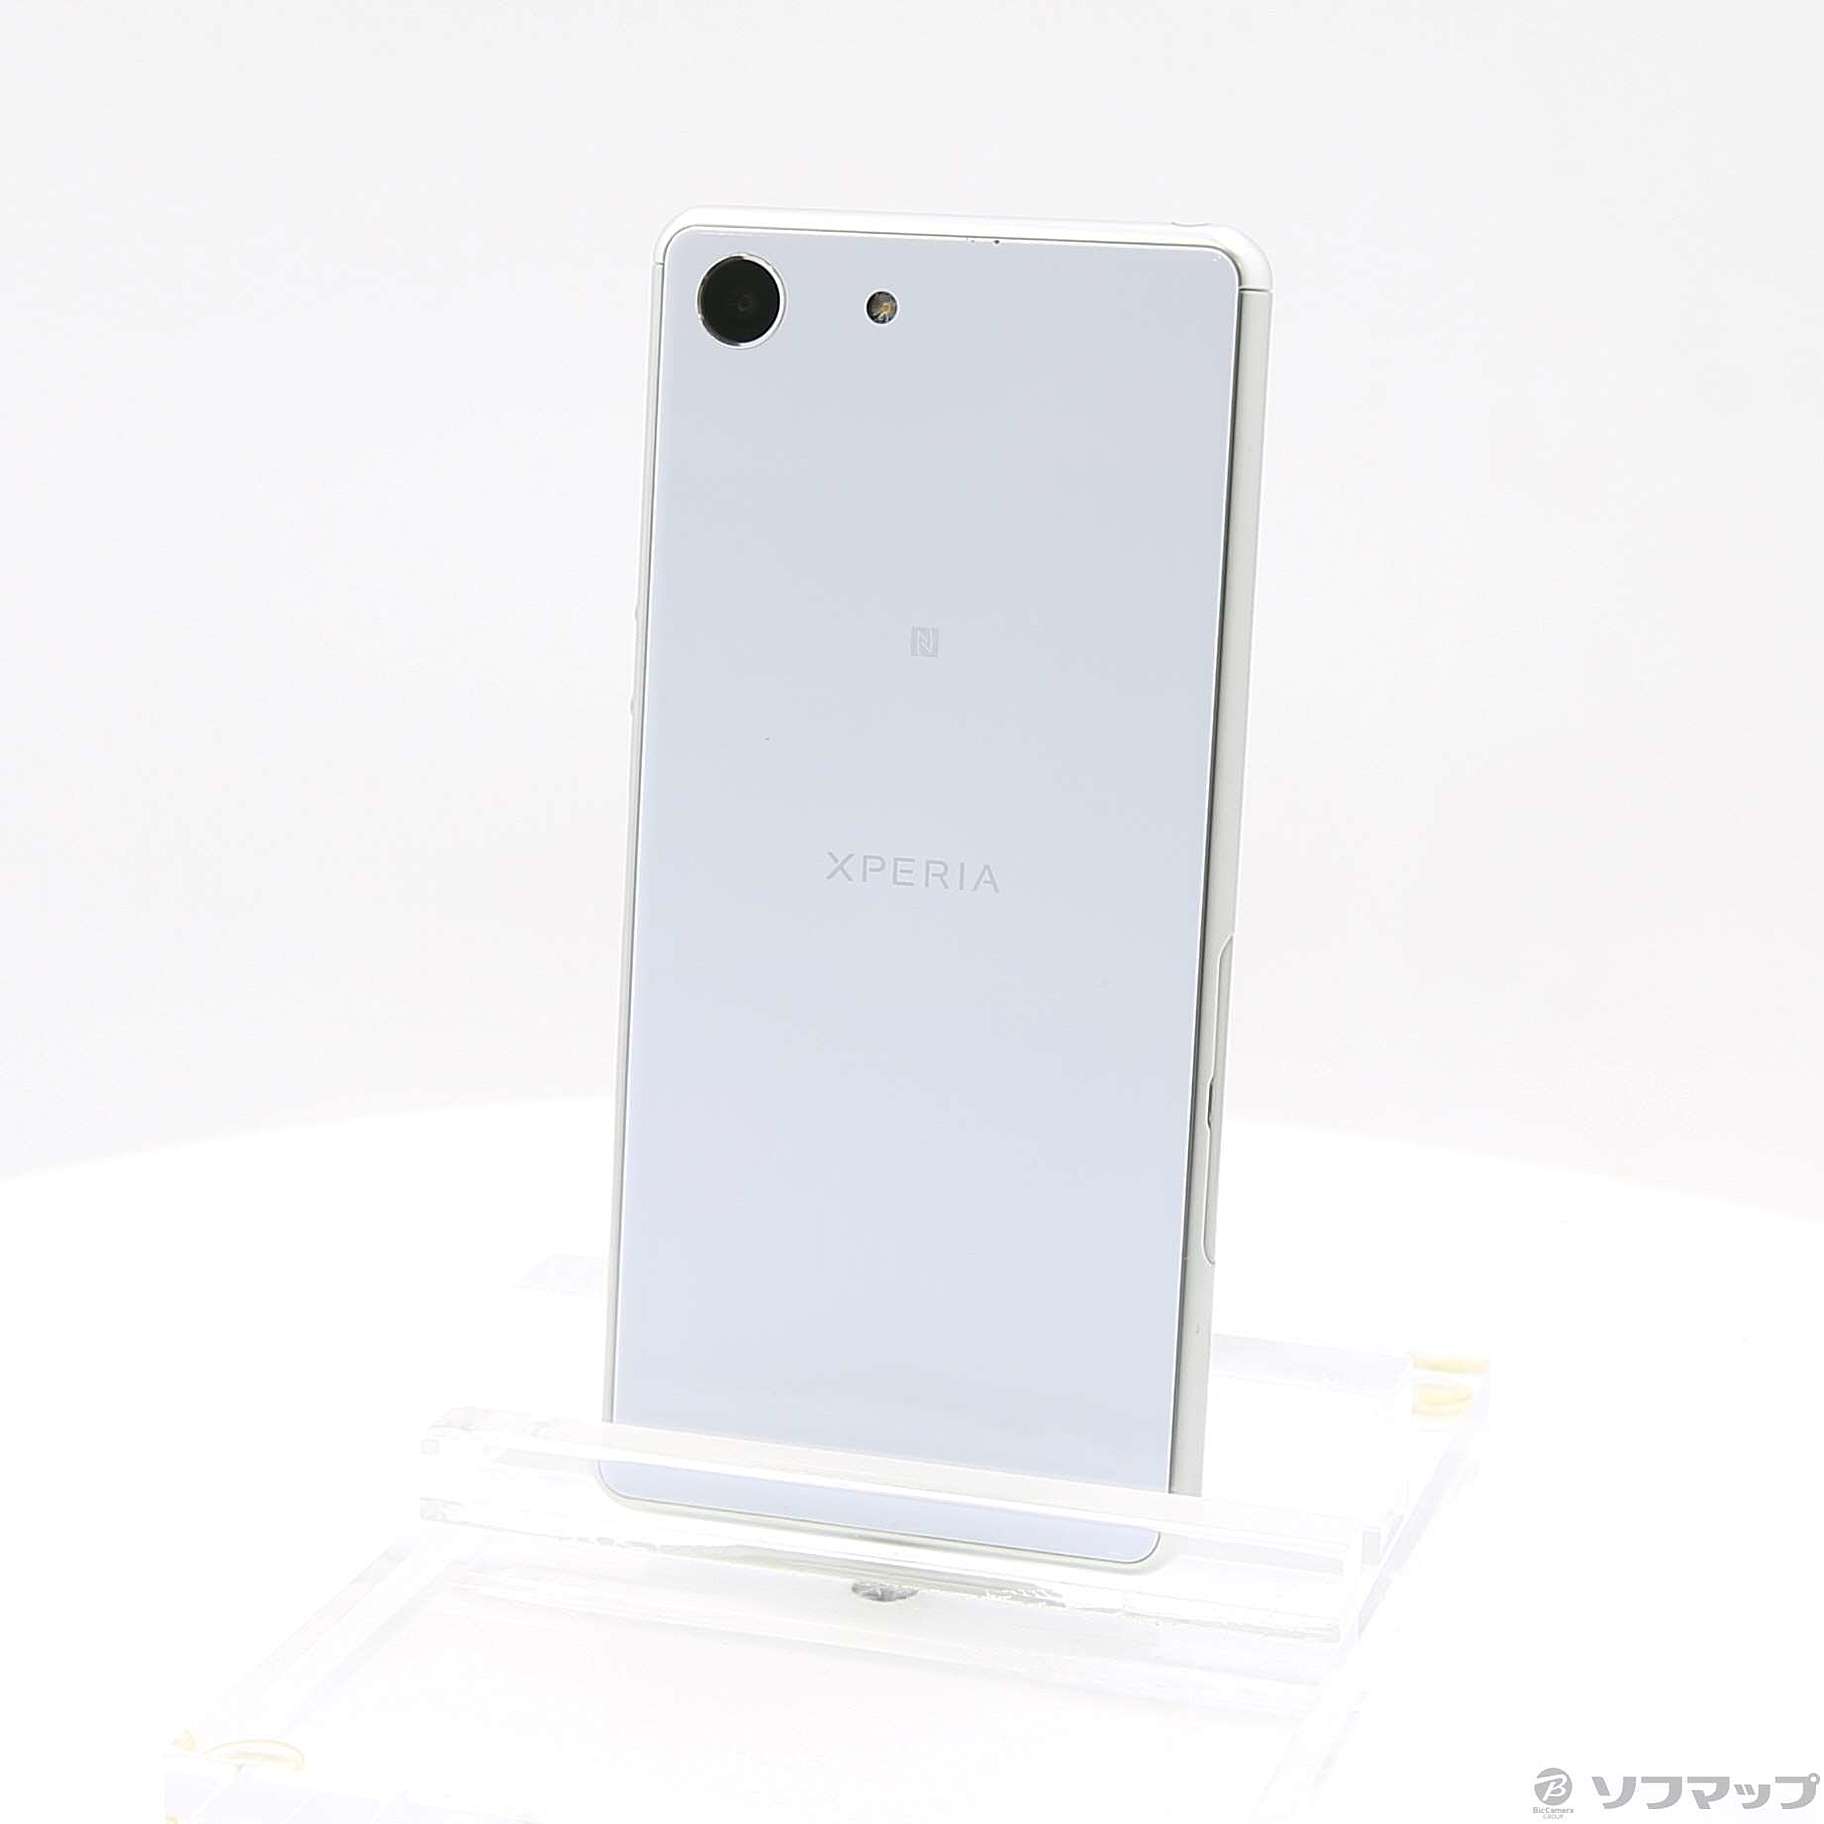 Xperia Ace 楽天版 64GB ホワイト J3173 SIMフリー